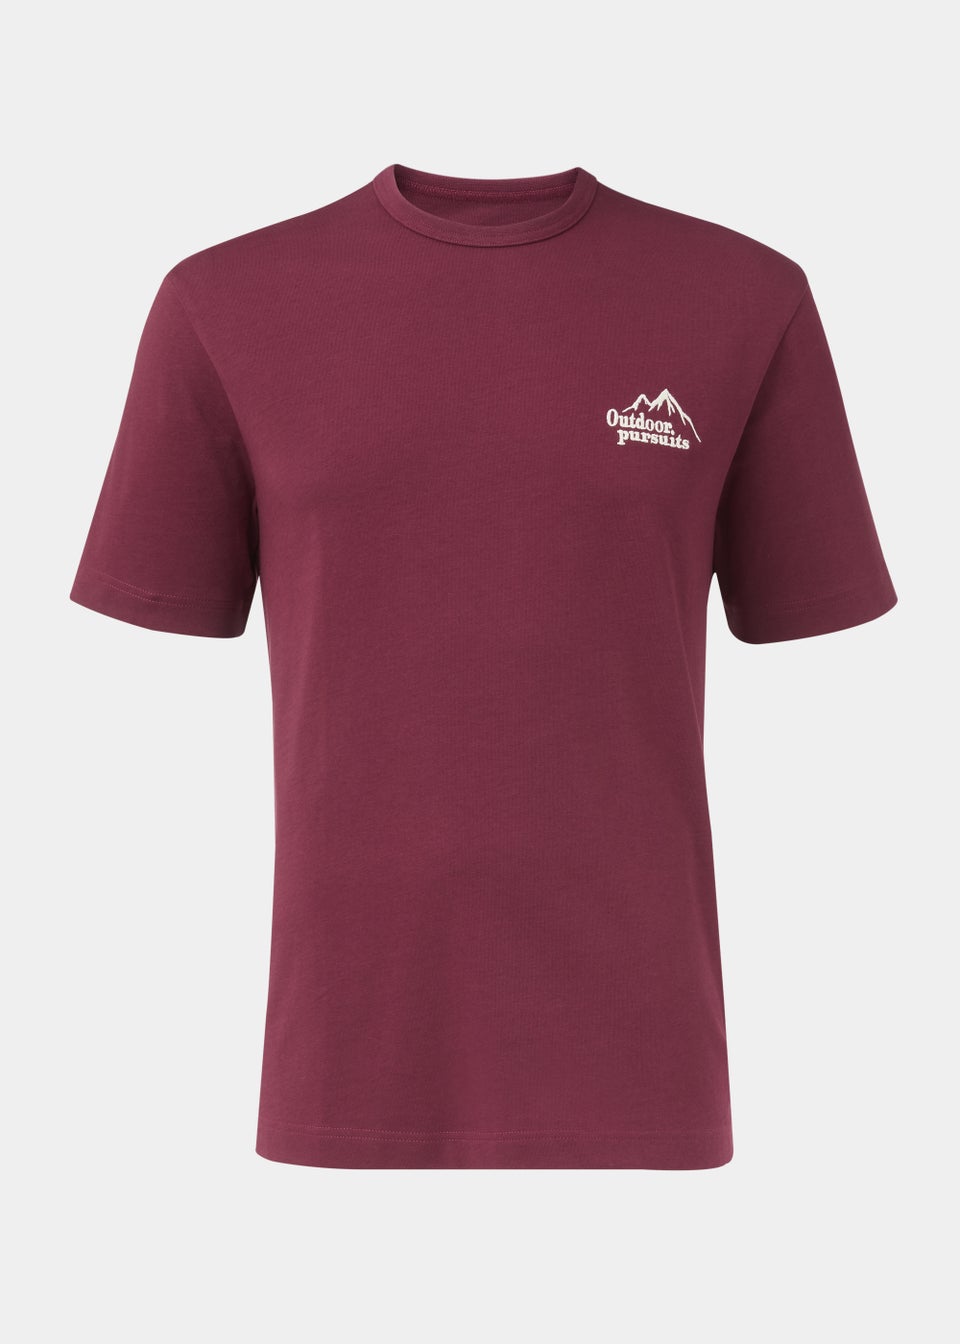 Burgundy Outdoor Pursuits T-Shirt - Matalan